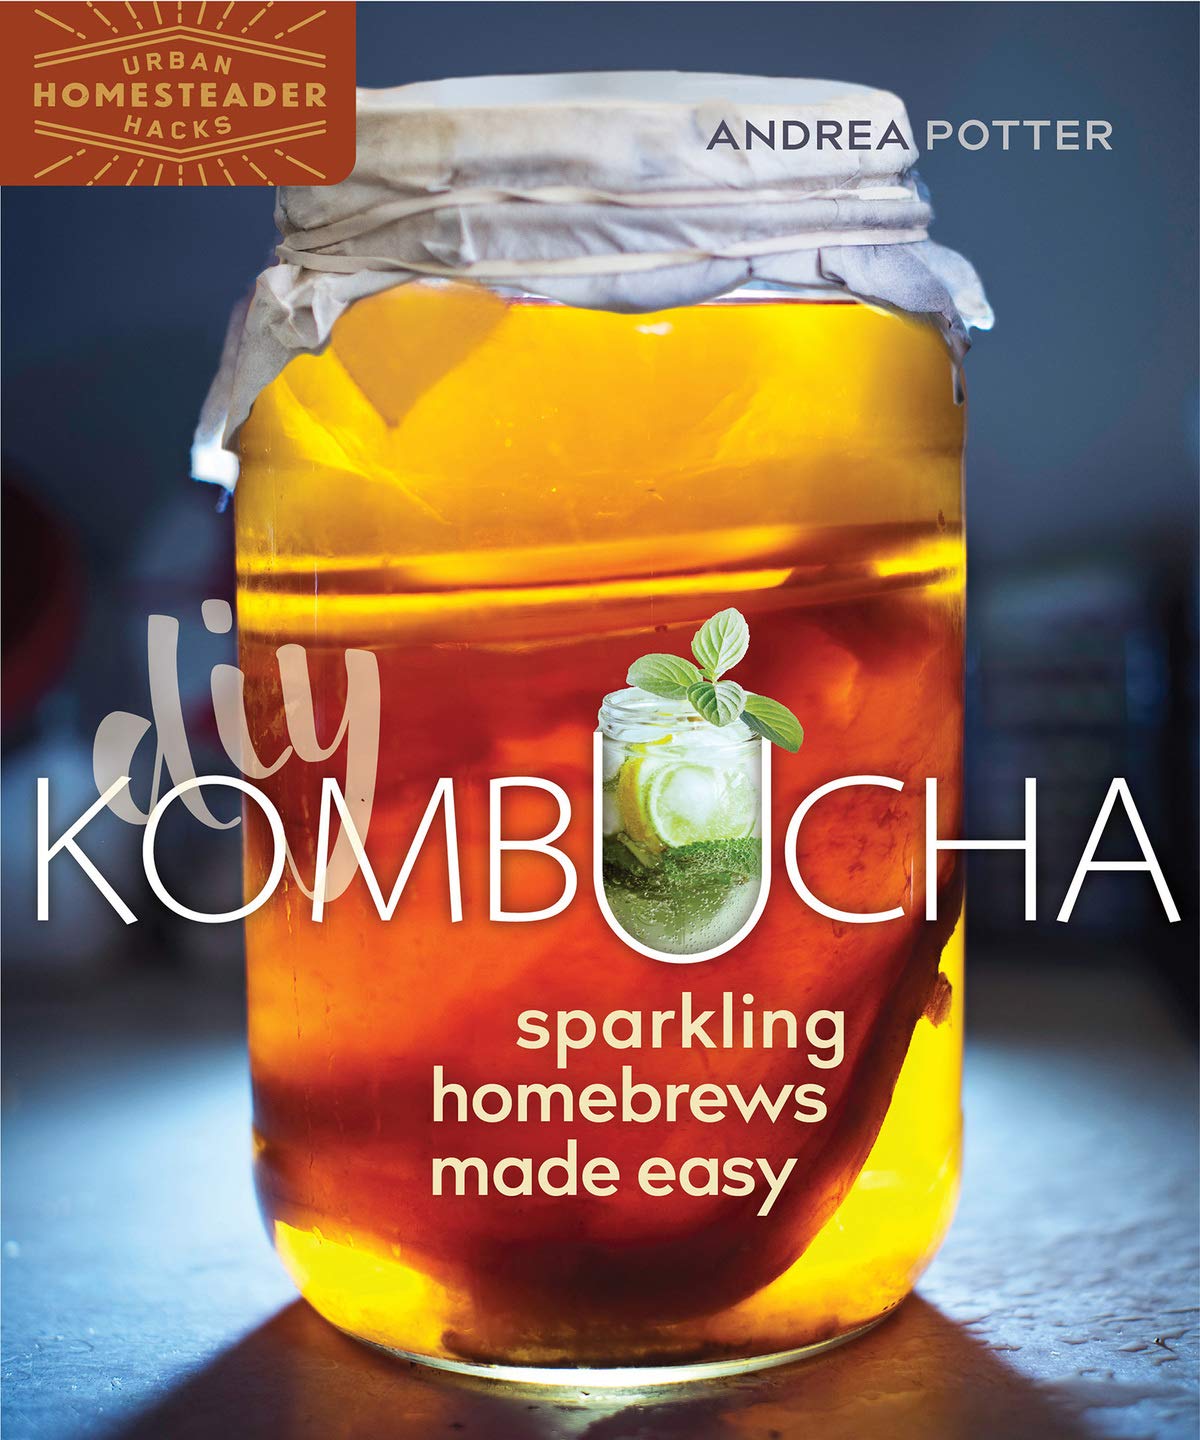 DIY Kombucha: Sparkling Homebrews Made Easy (Andrea Potter)